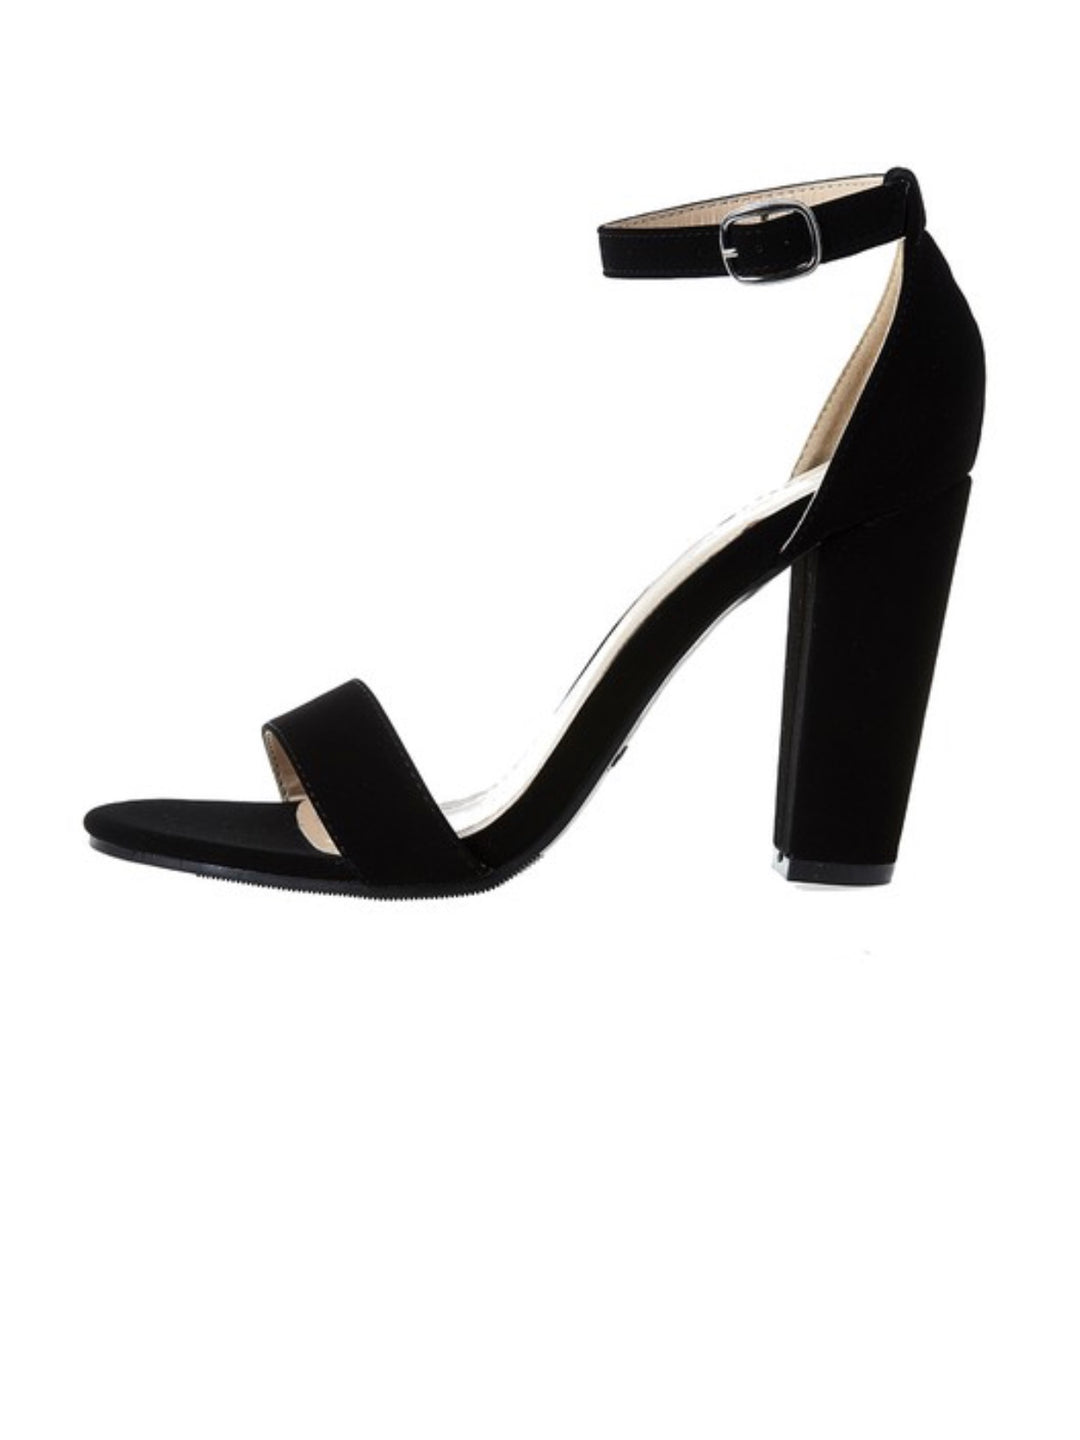 BLACK STRAPPY HEELS-Shoes-Malandra Boutique-Malandra Boutique, Women's Fashion Boutique Located in Las Vegas, NV